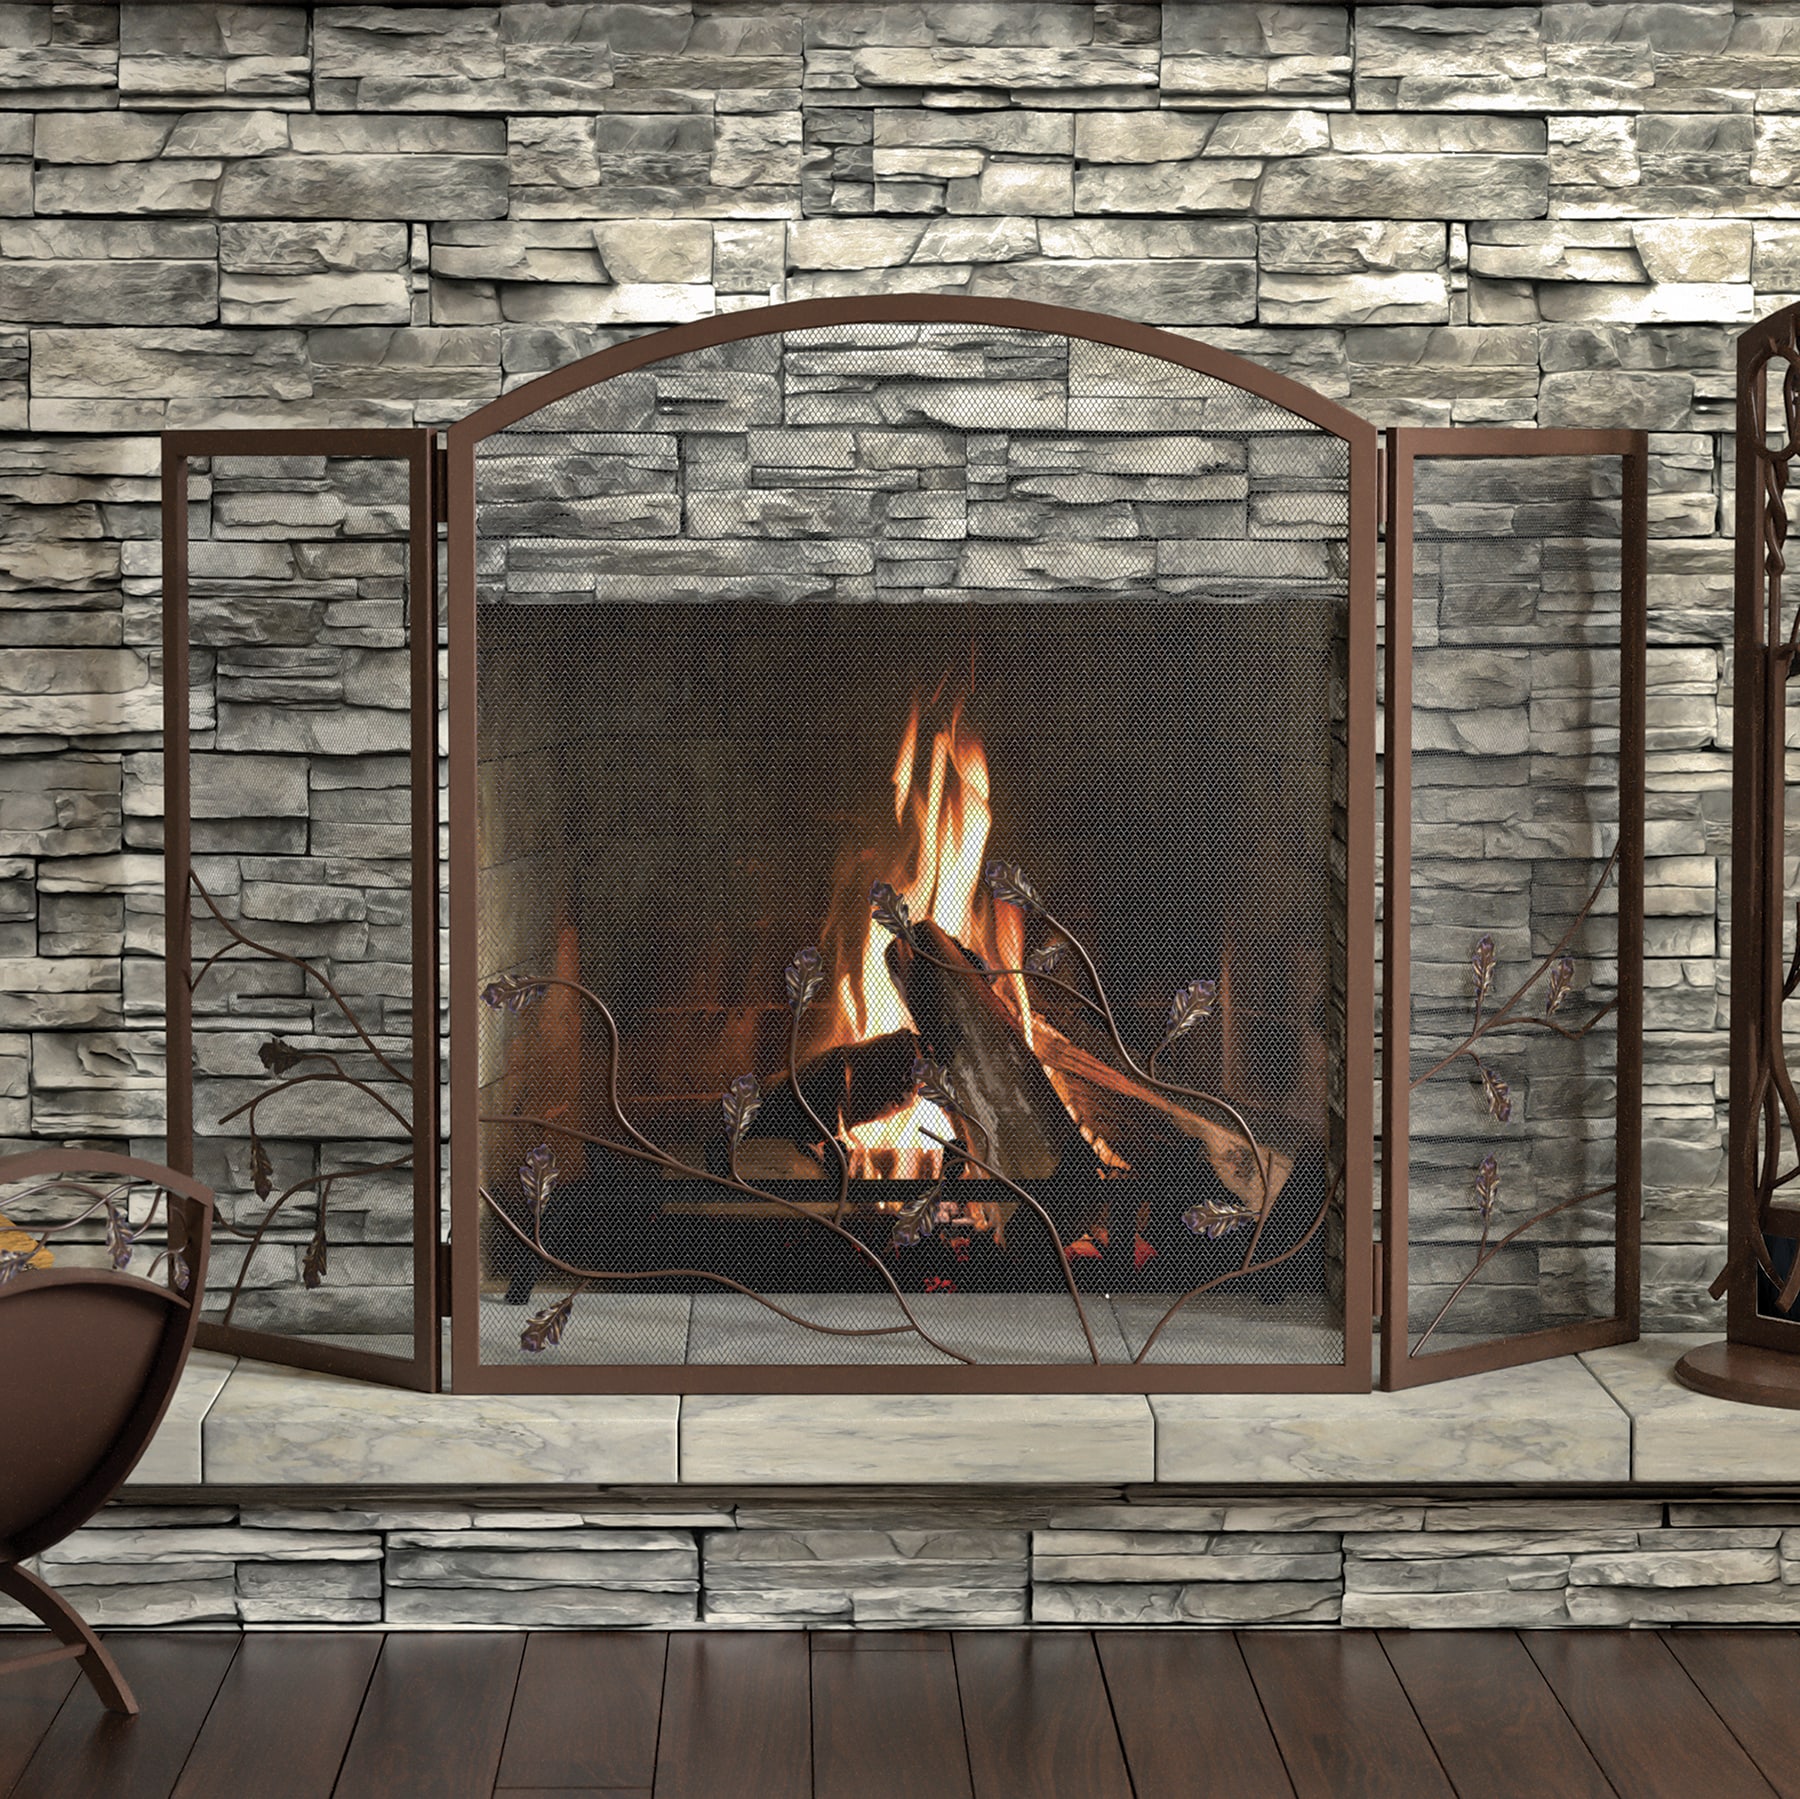  WICHEMI Fireplace Screen 3 Panel Folding Fireplace